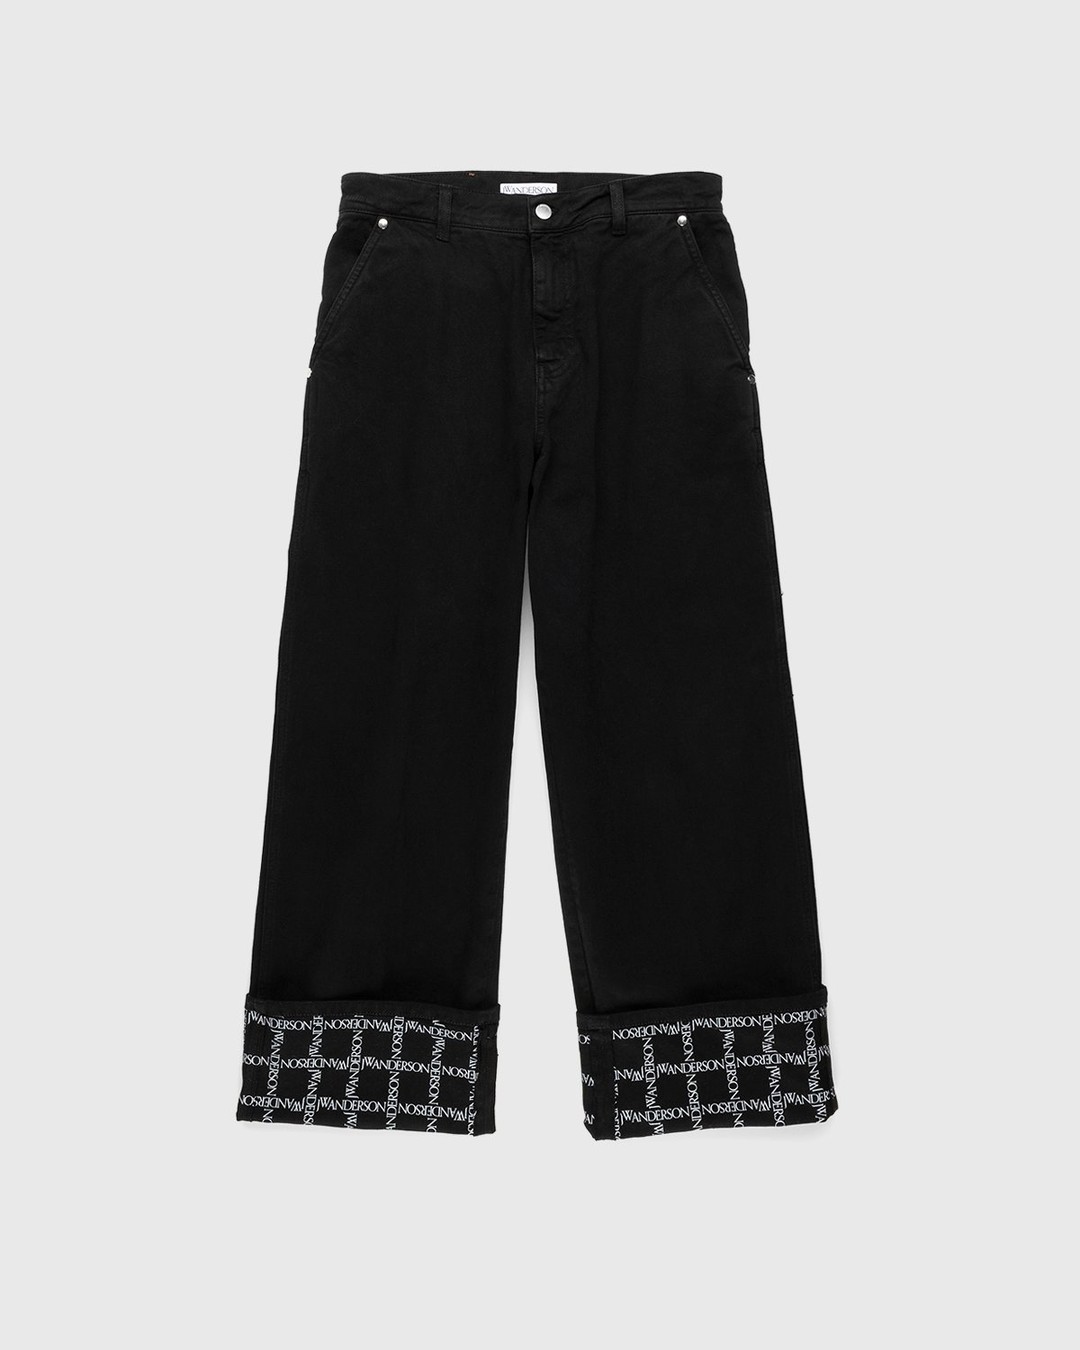 J.W. Anderson – Logo Grid Cuff Wide Leg Jeans Black - Denim - Black - Image 1